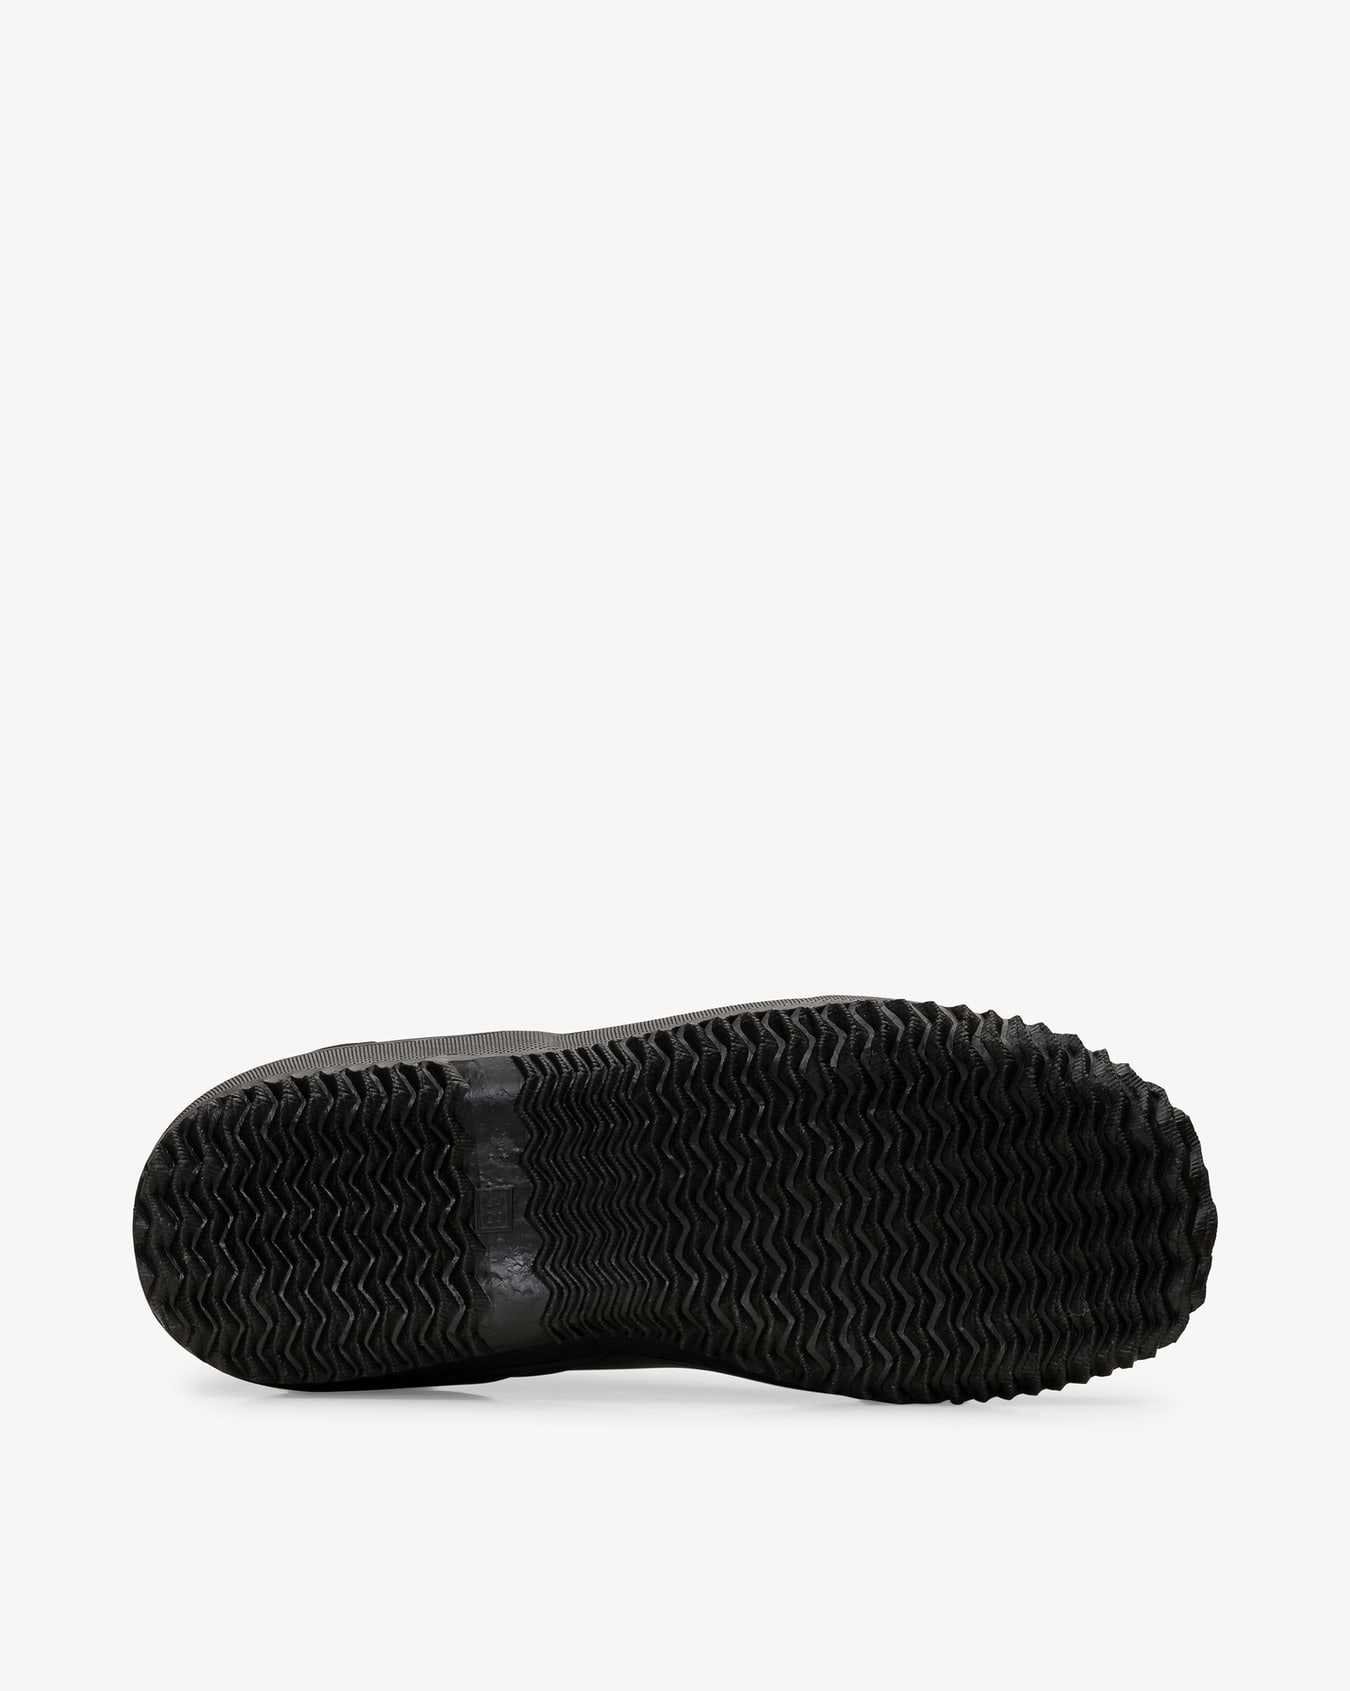 Paveport Black/Black Rubber Boot